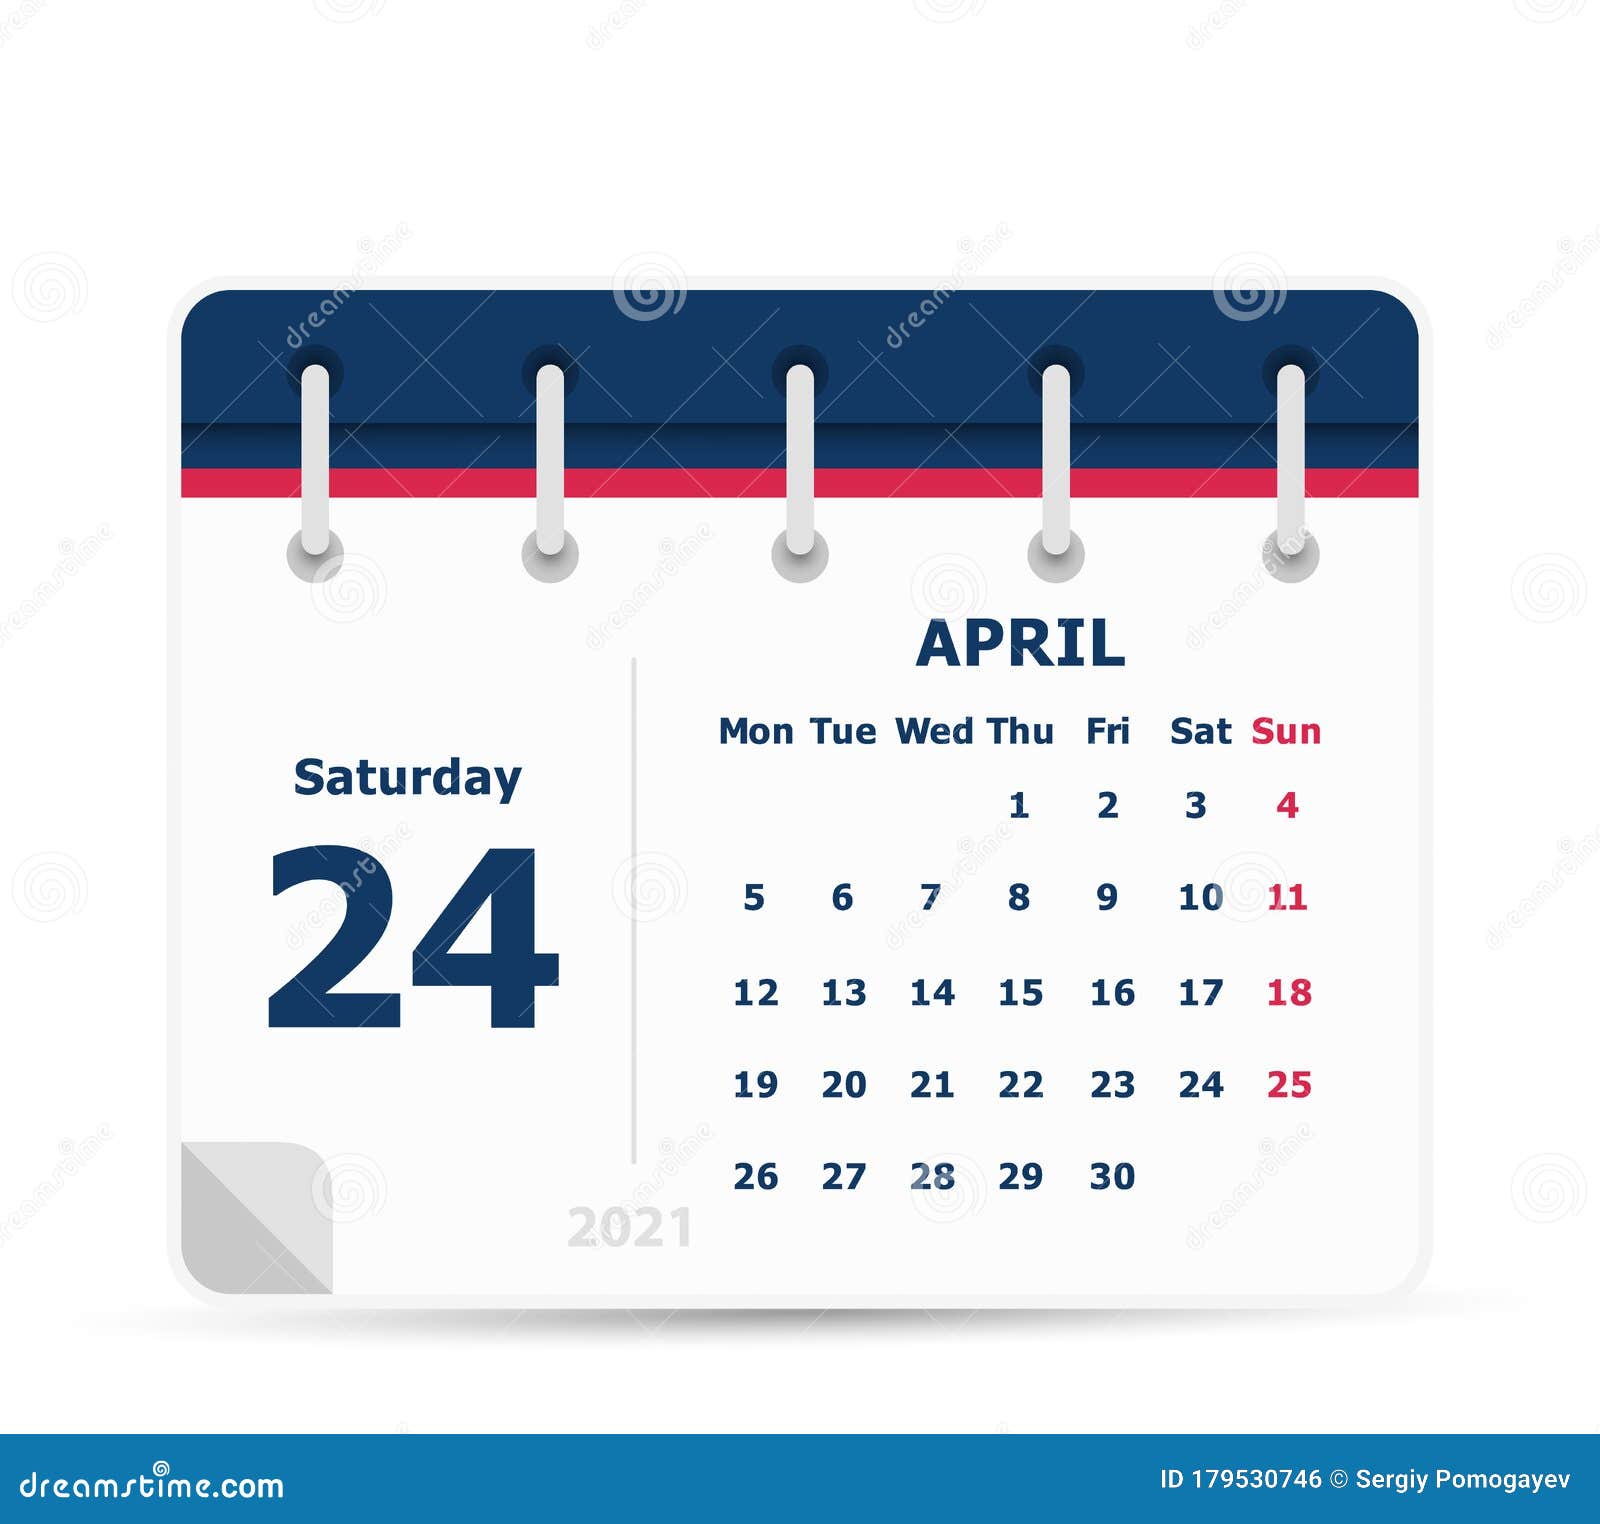 April 24 Calendar Icon 2021 Stock Vector Illustration of planner